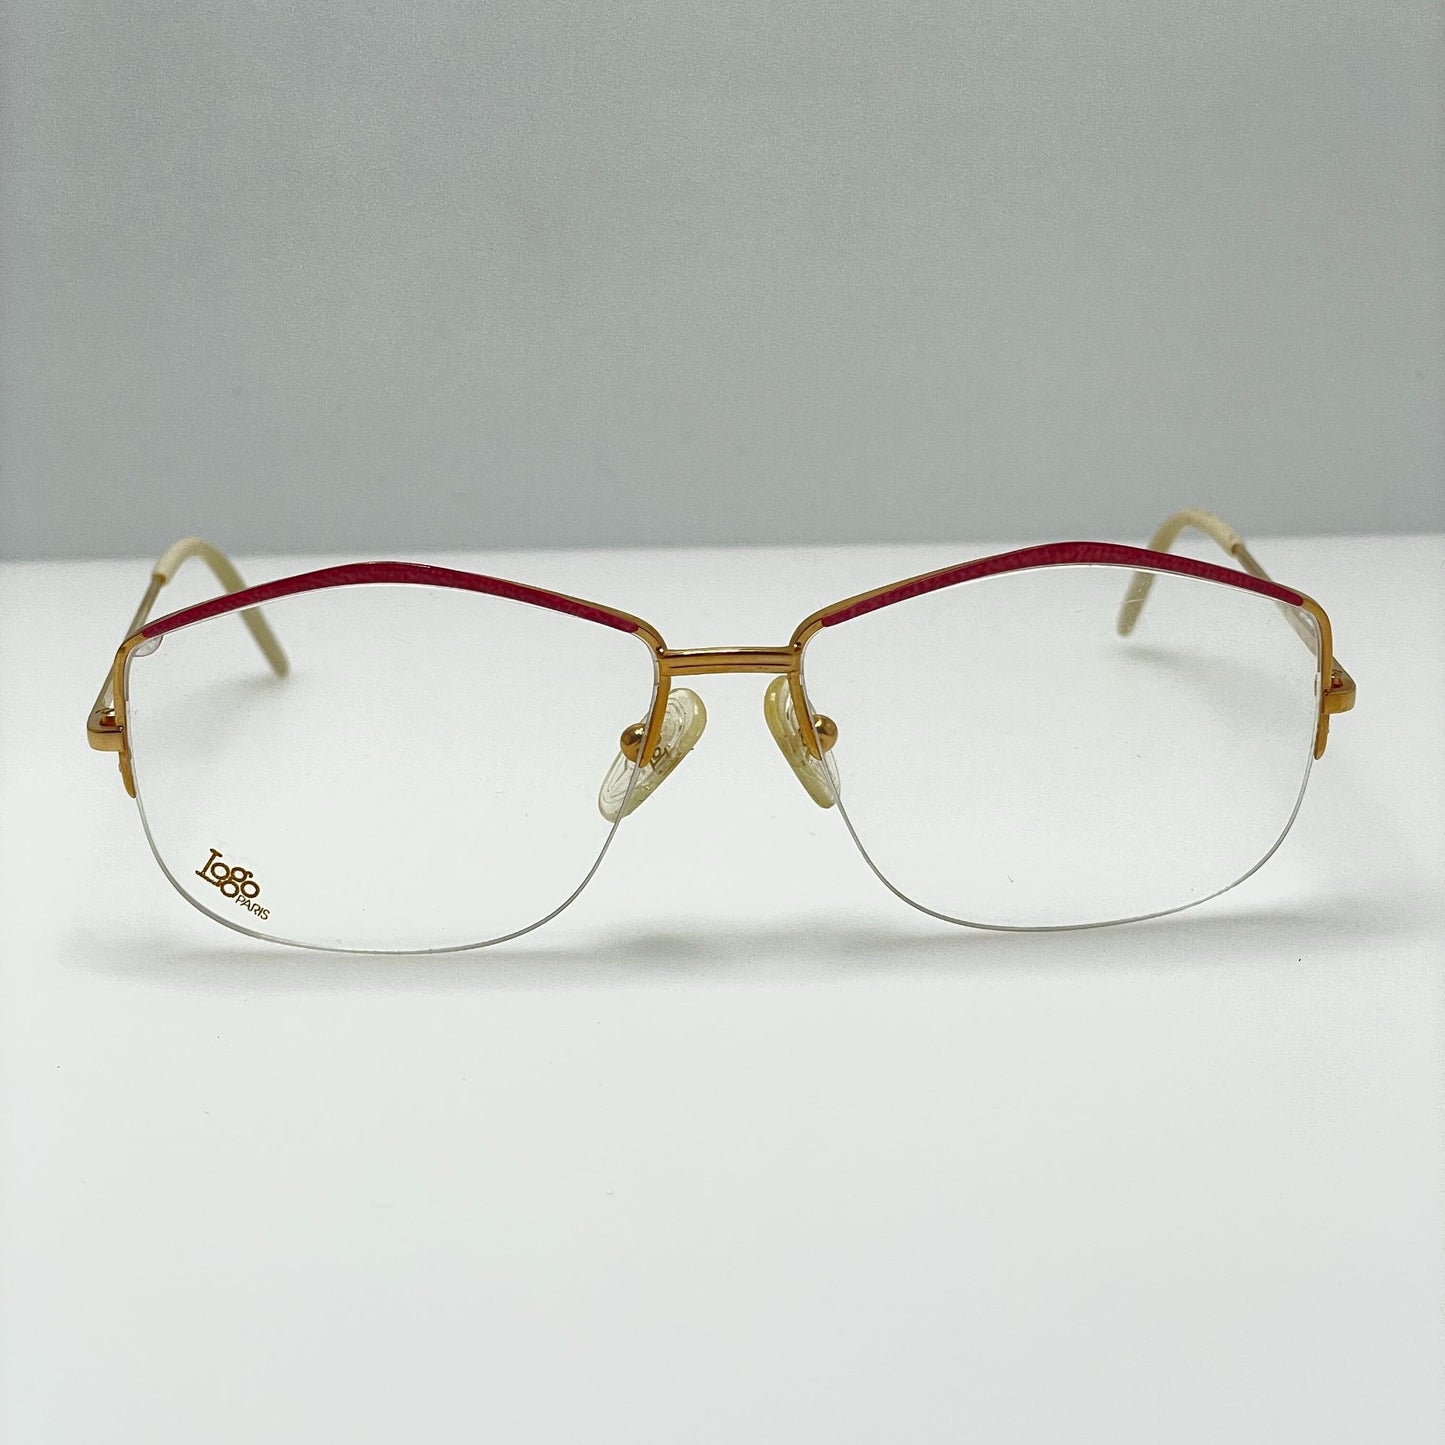 Logo Paris Eyeglasses Eye Glasses Frames 403-22 008 Vintage France 56-15